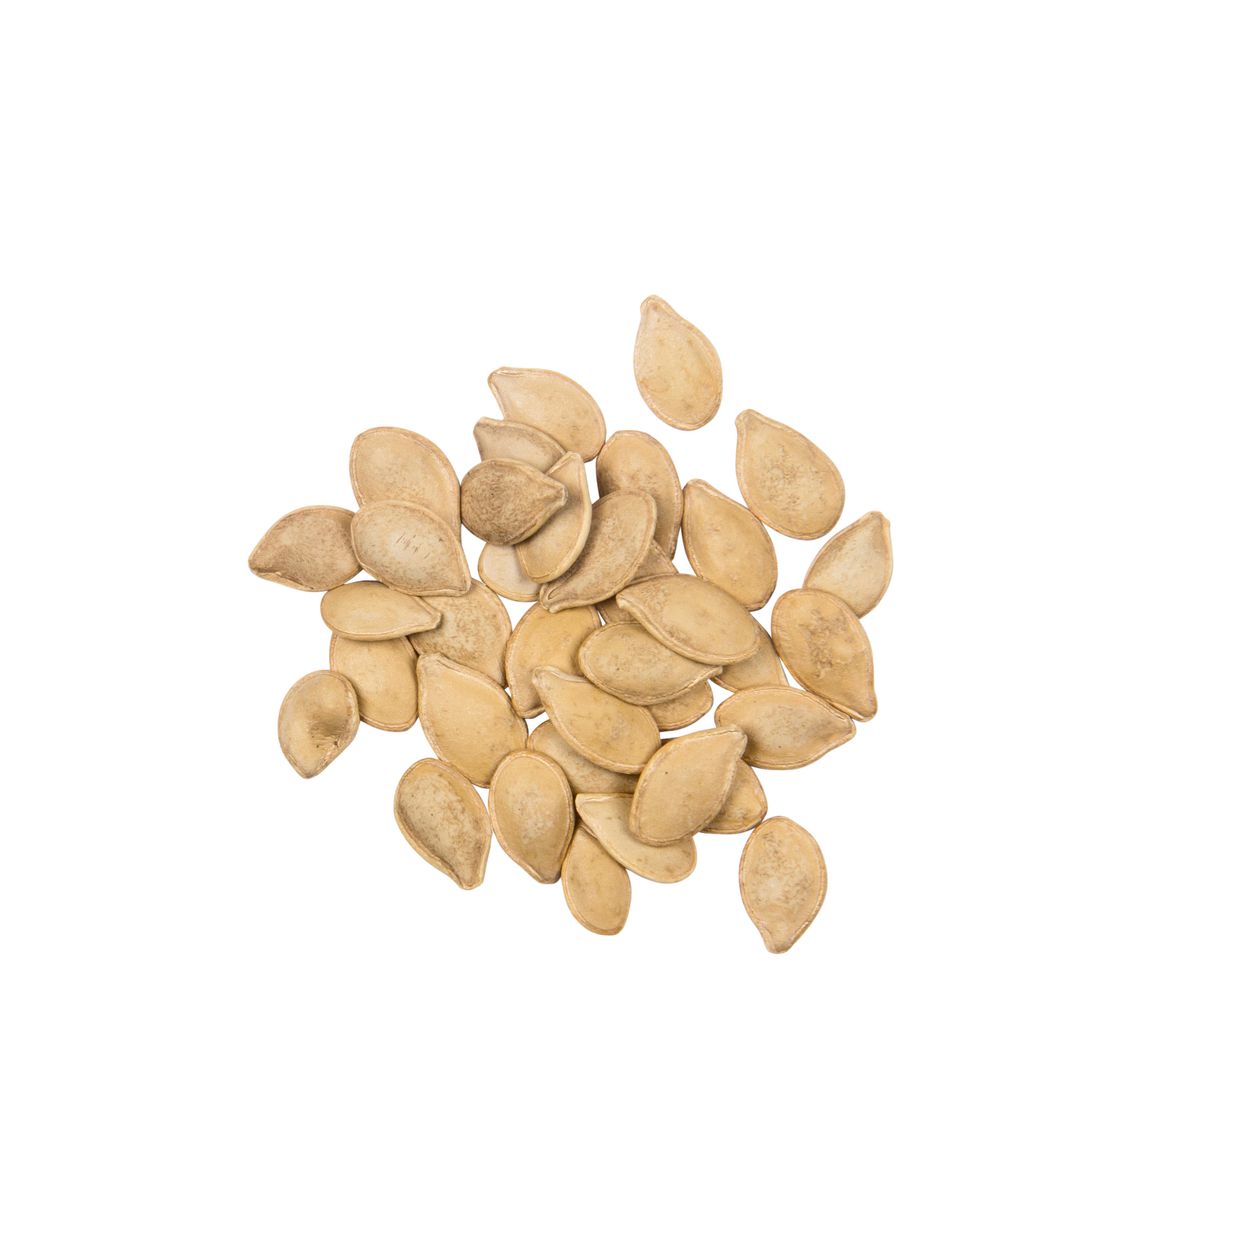 Brim Seed Co. - Winter Table Queen Acorn Squash Heirloom Seed